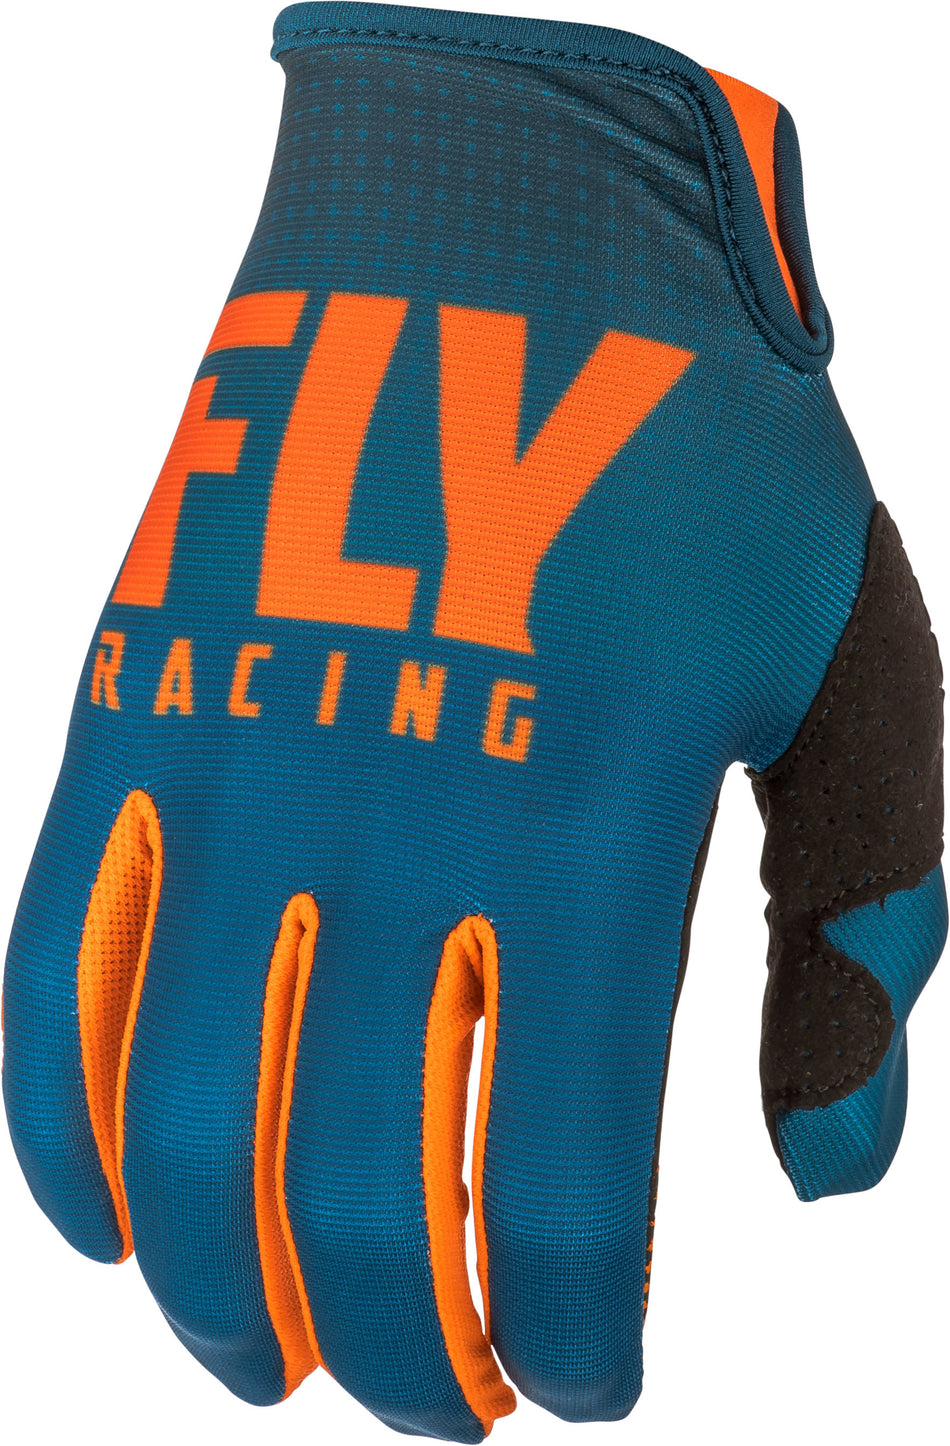 FLY RACING Lite Gloves Orange/Navy Sz 10 372-01610